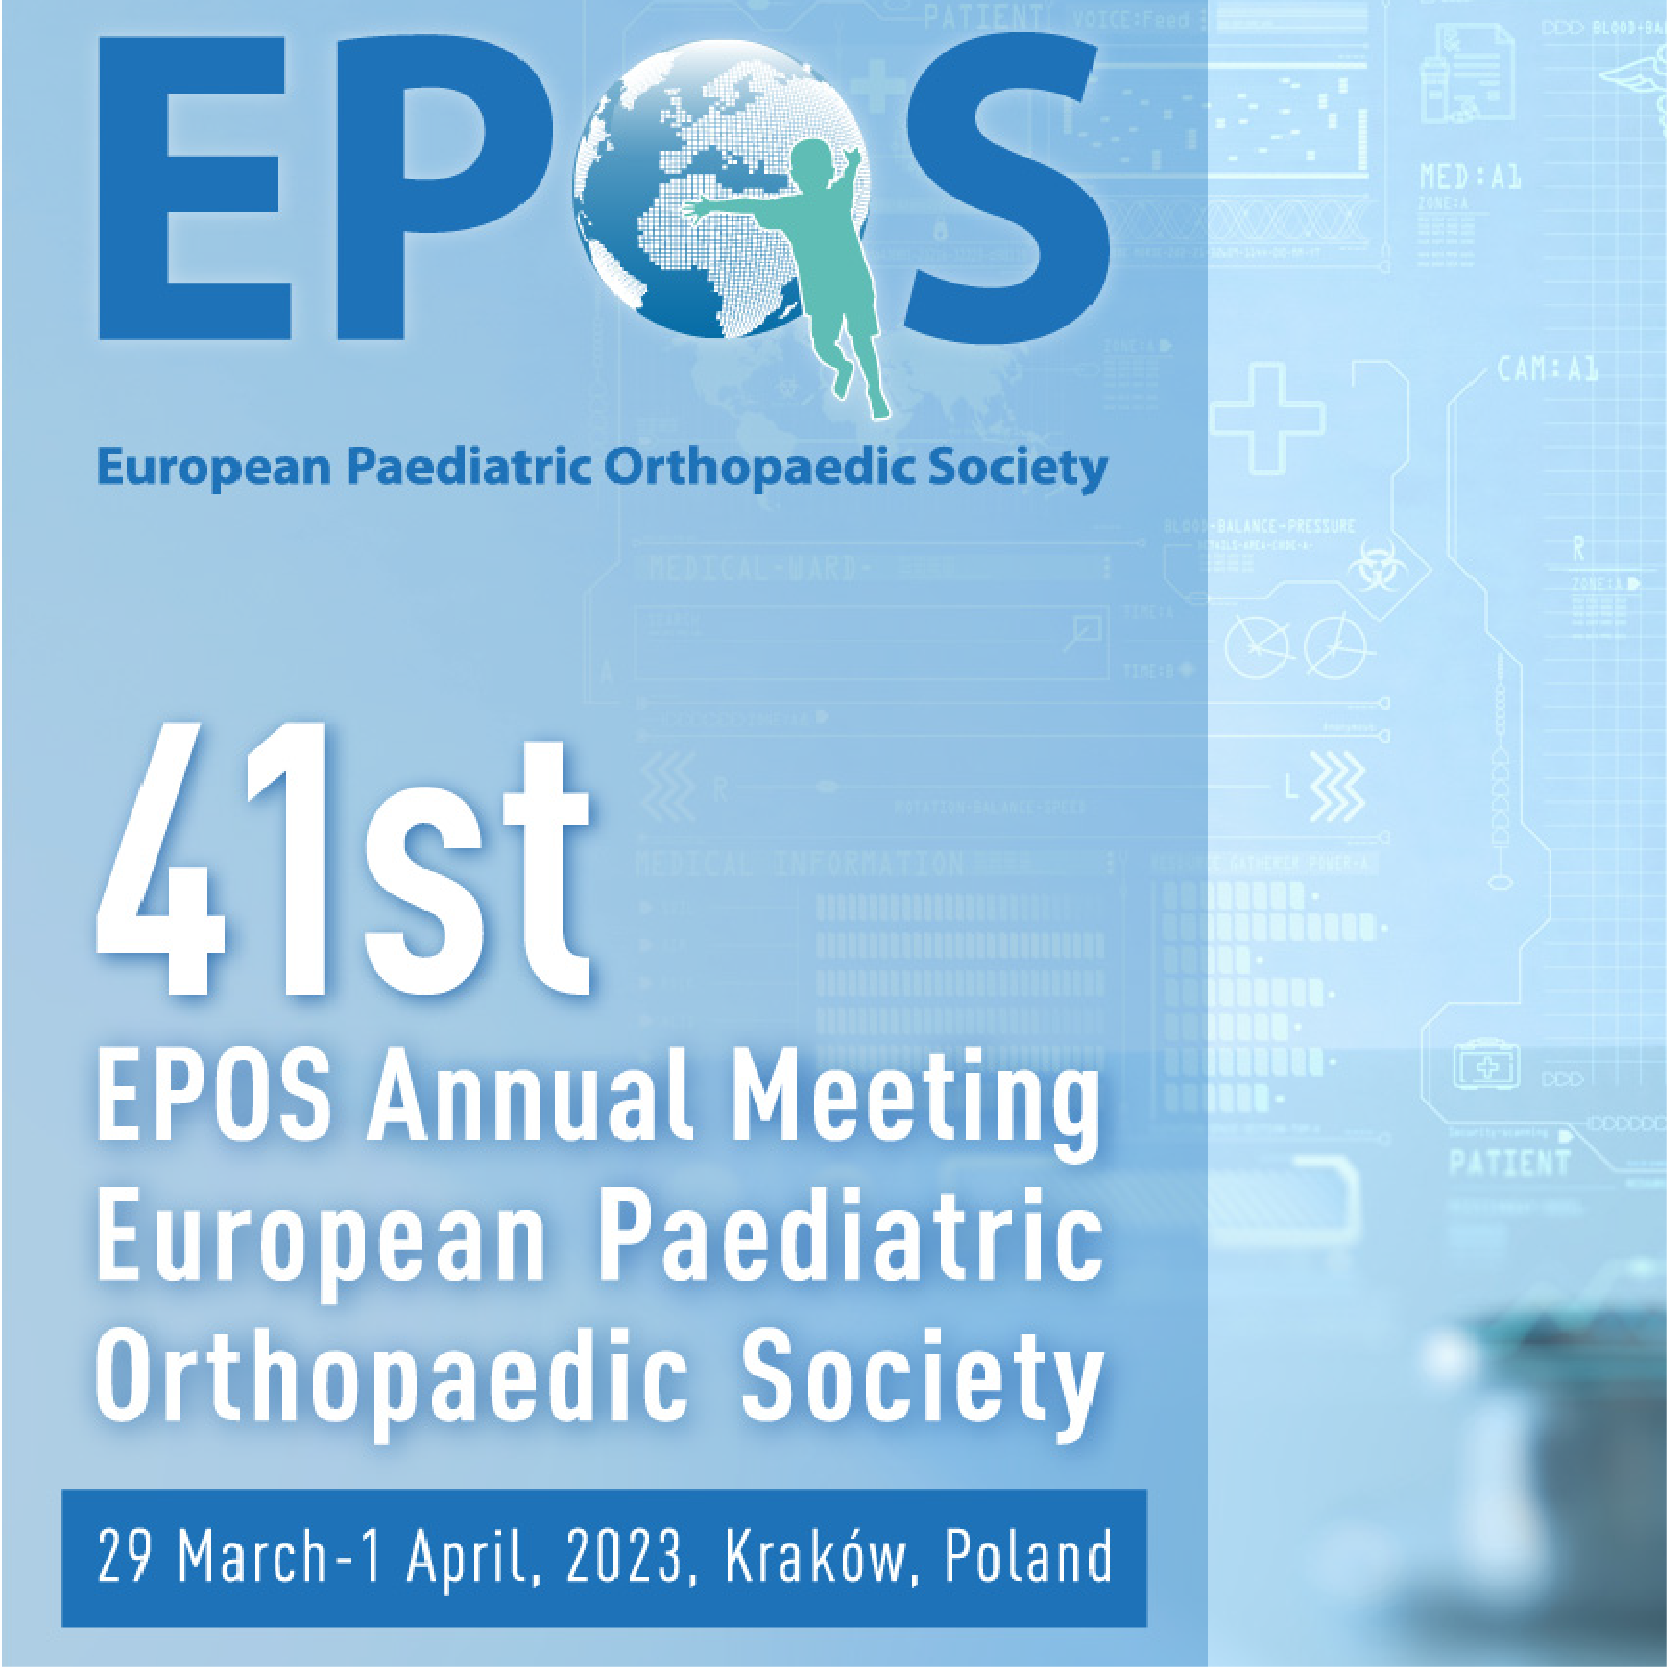 Medflixs 41st Annual Meeting of the European Paediatric Orthopaedic